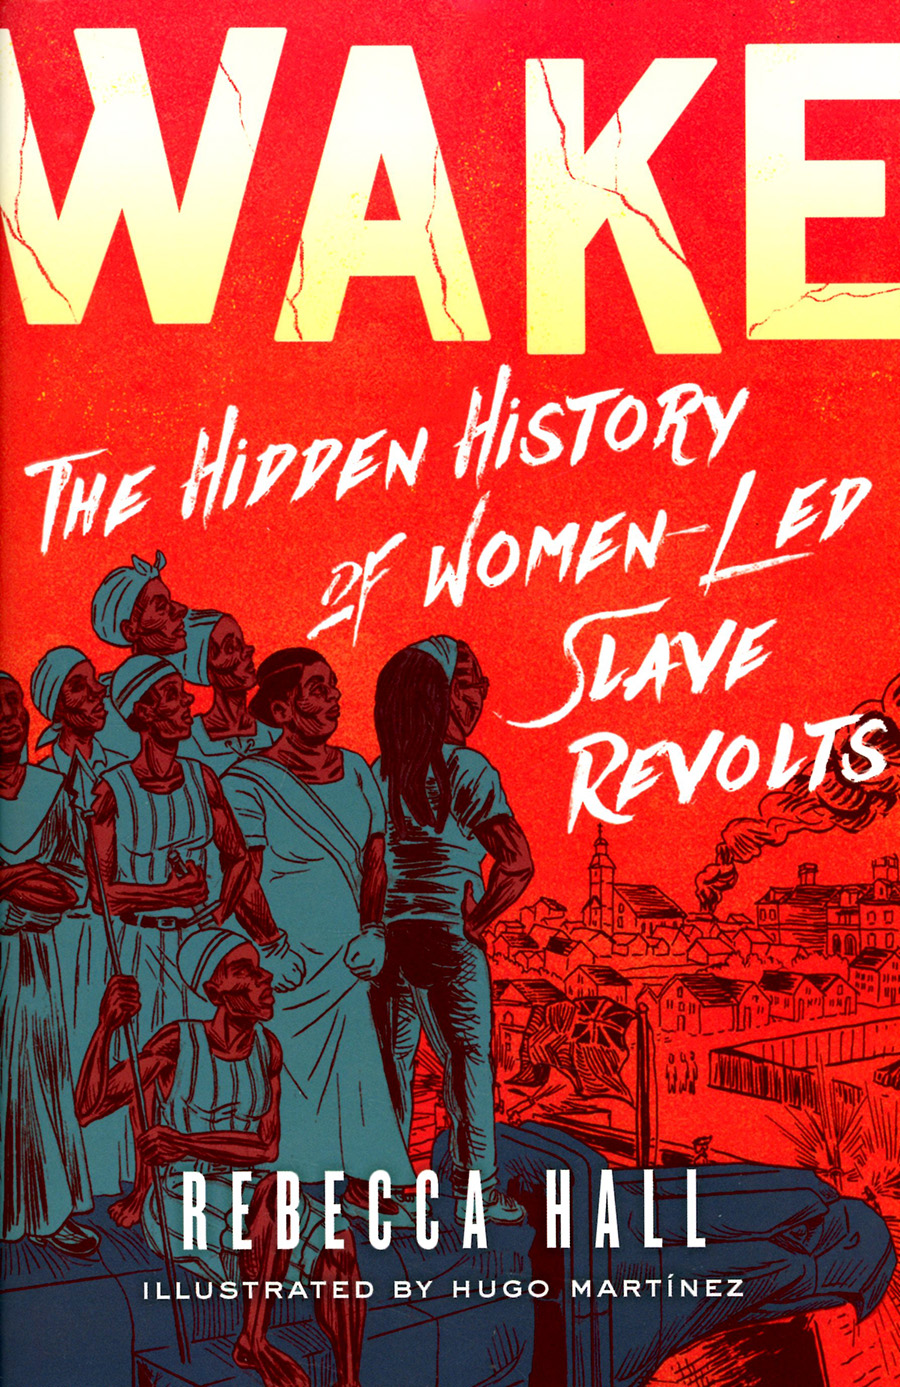 Wake Hidden History Of Women-Led Slave Revolts HC